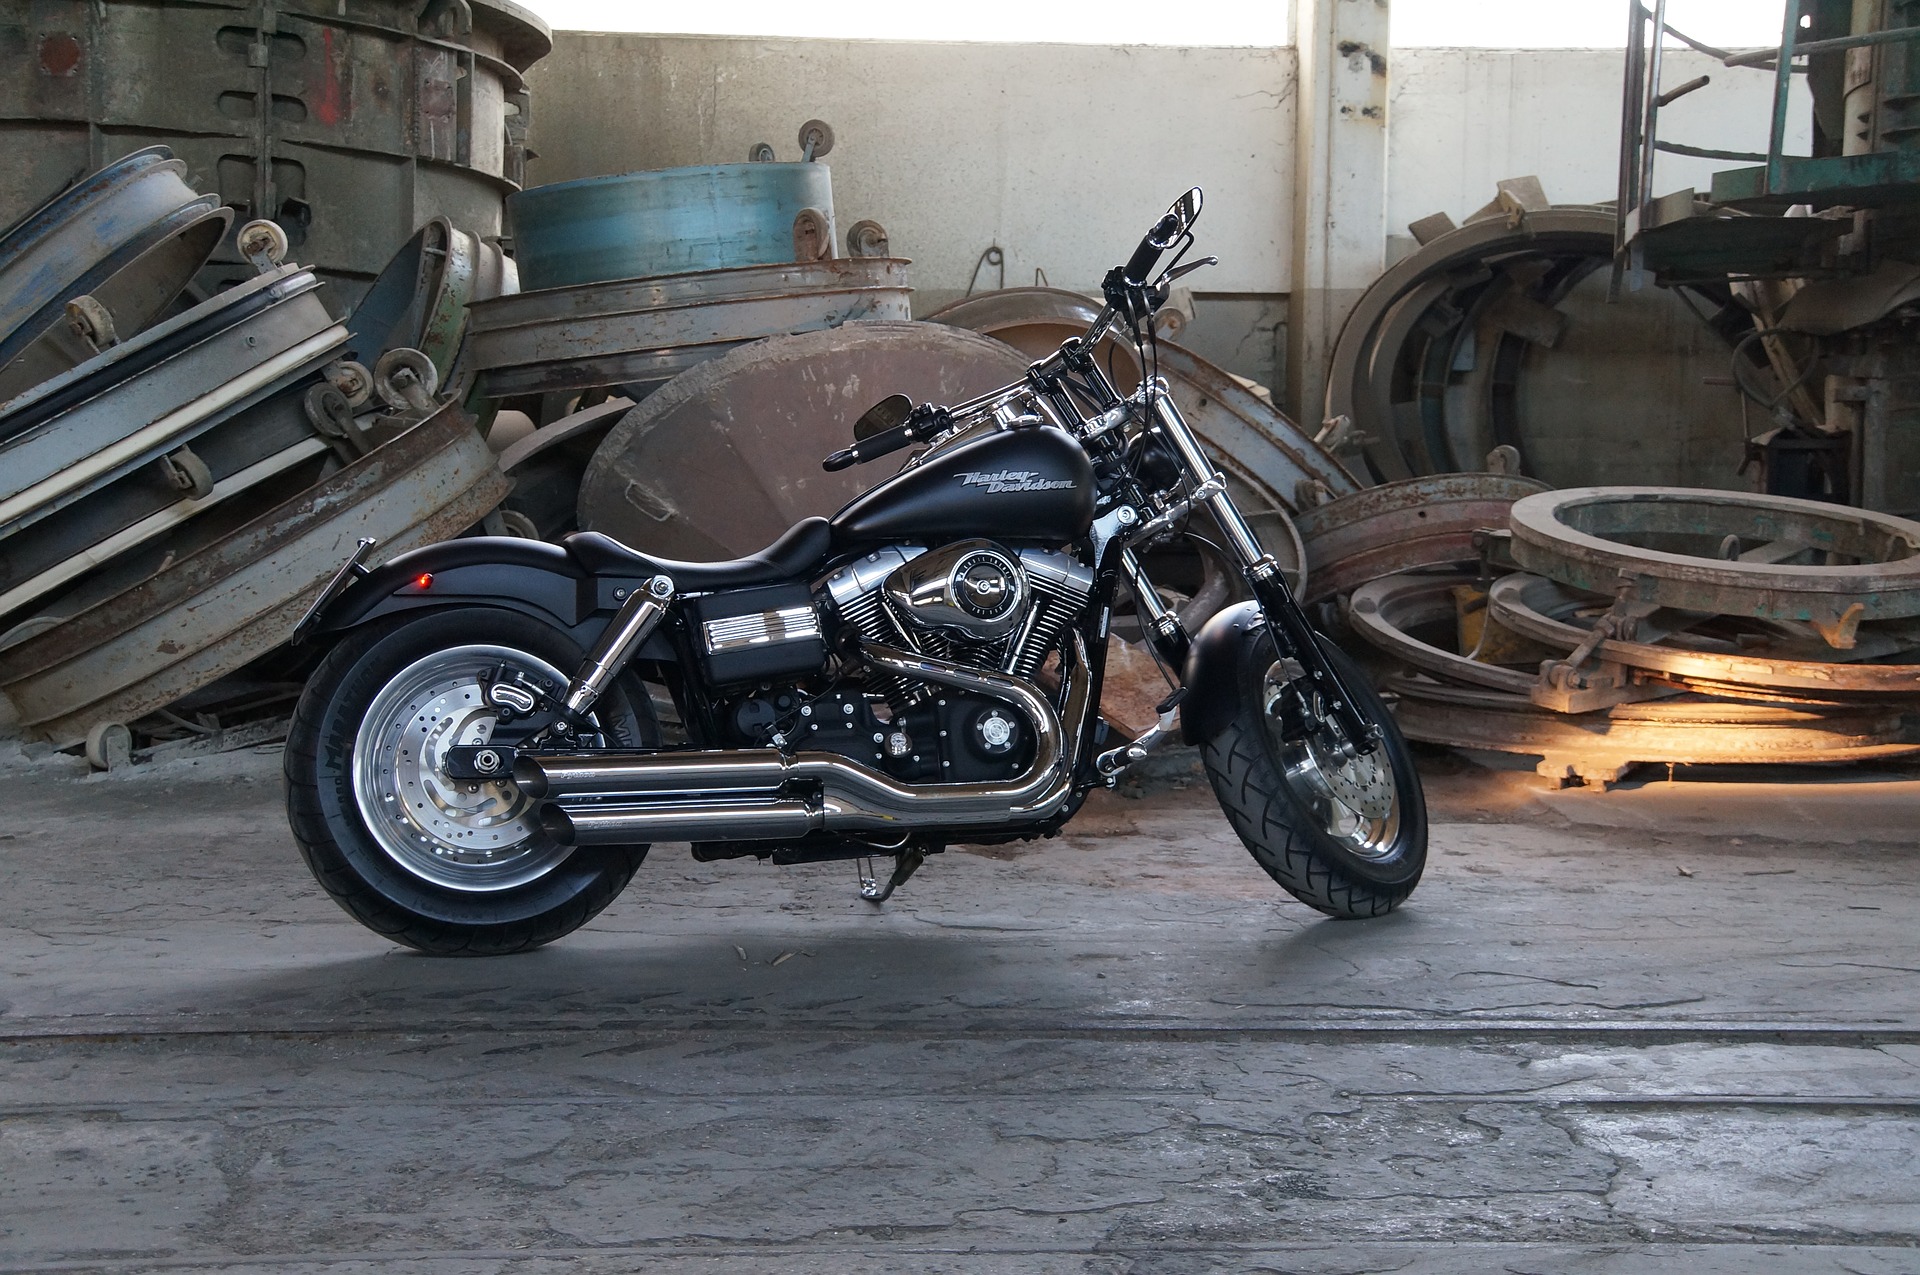 Black Harley Davidson Motorbike by callfrank